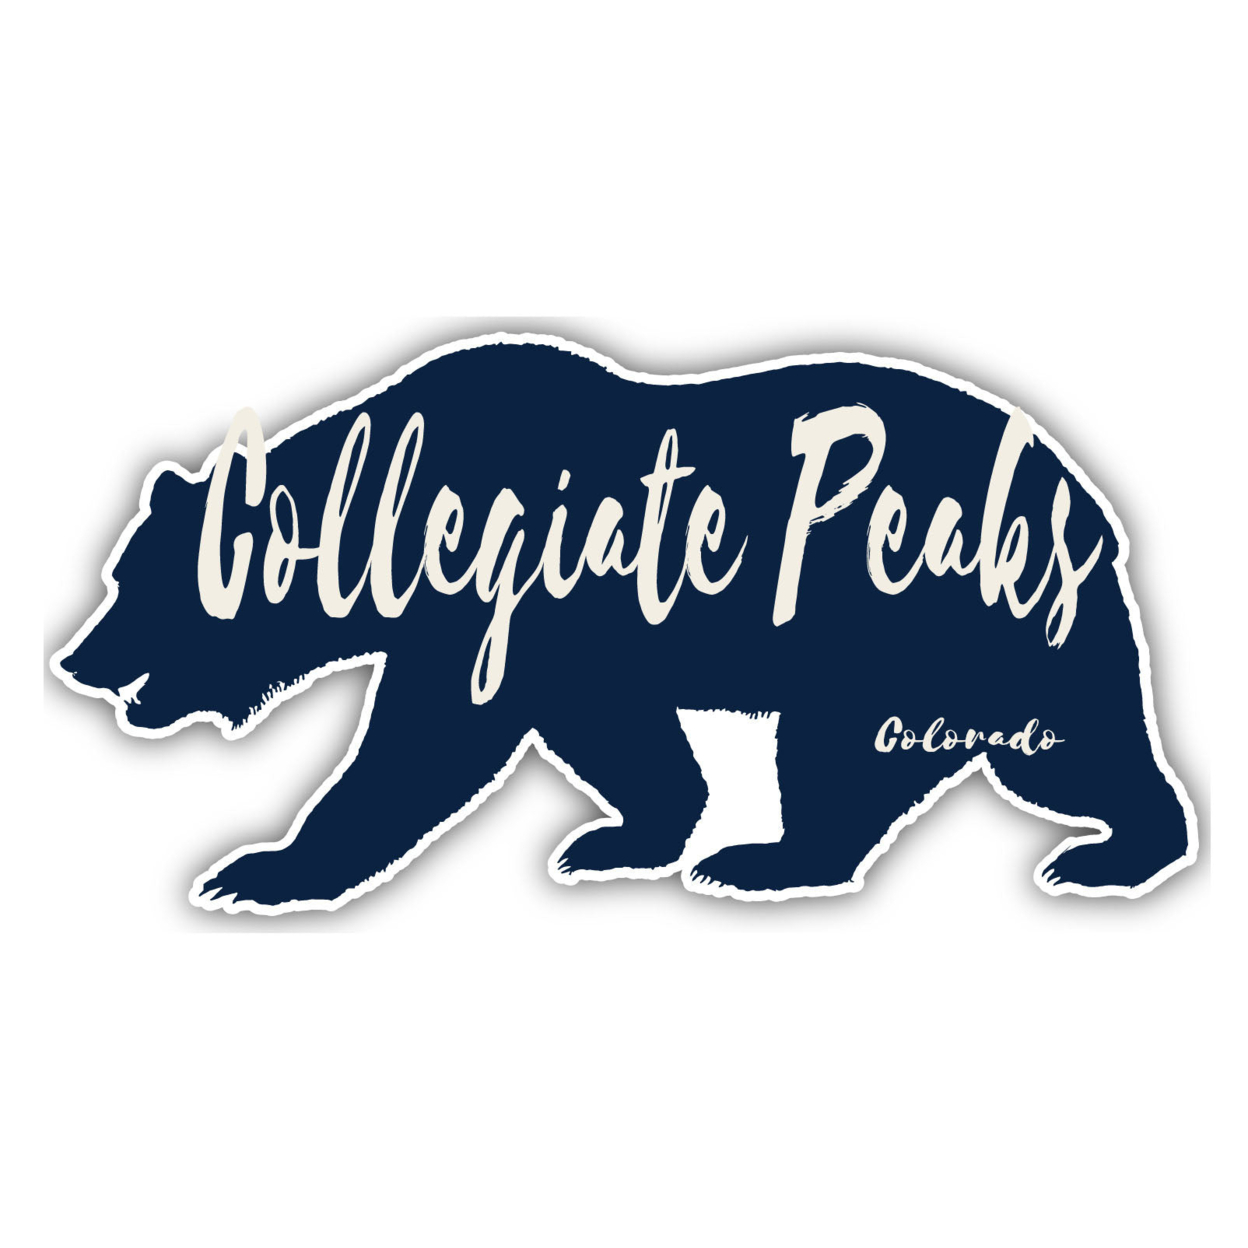 Collegiate Peaks Colorado Souvenir Decorative Stickers (Choose Theme And Size) - Single Unit, 12-Inch, Bear